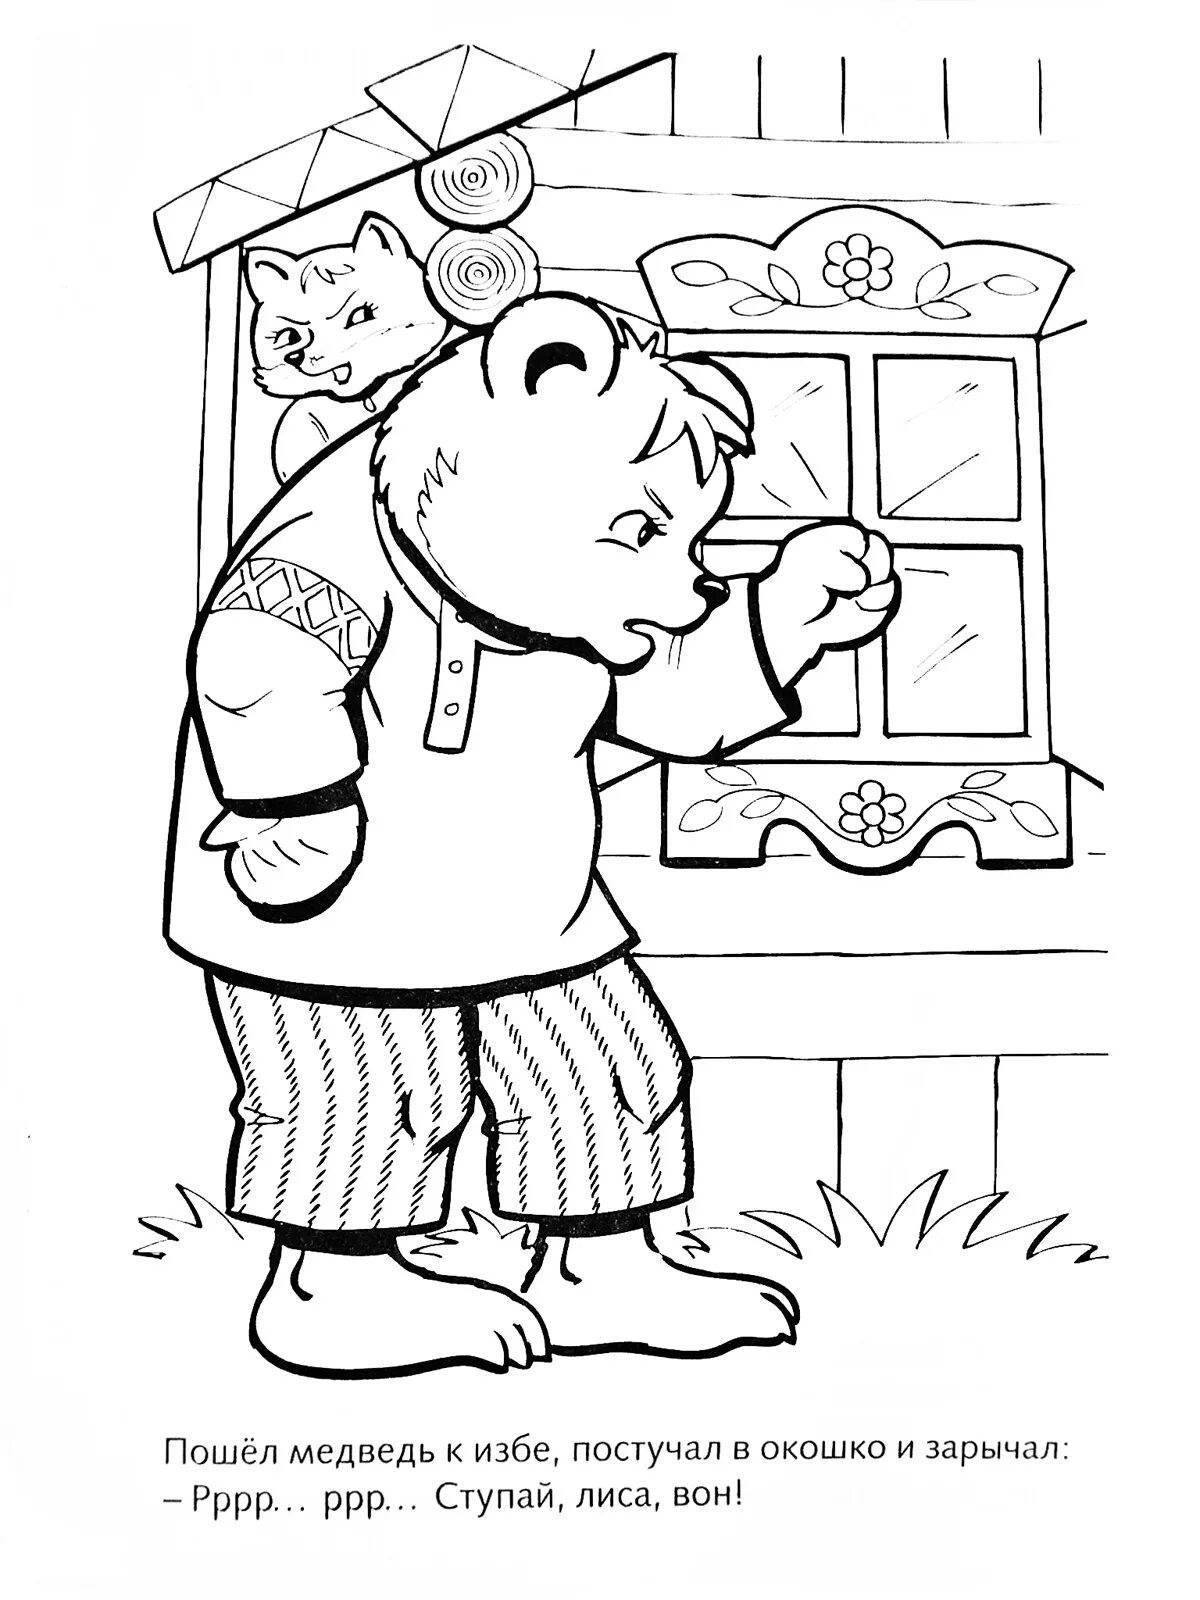 Charming teddy bear Teremok coloring book